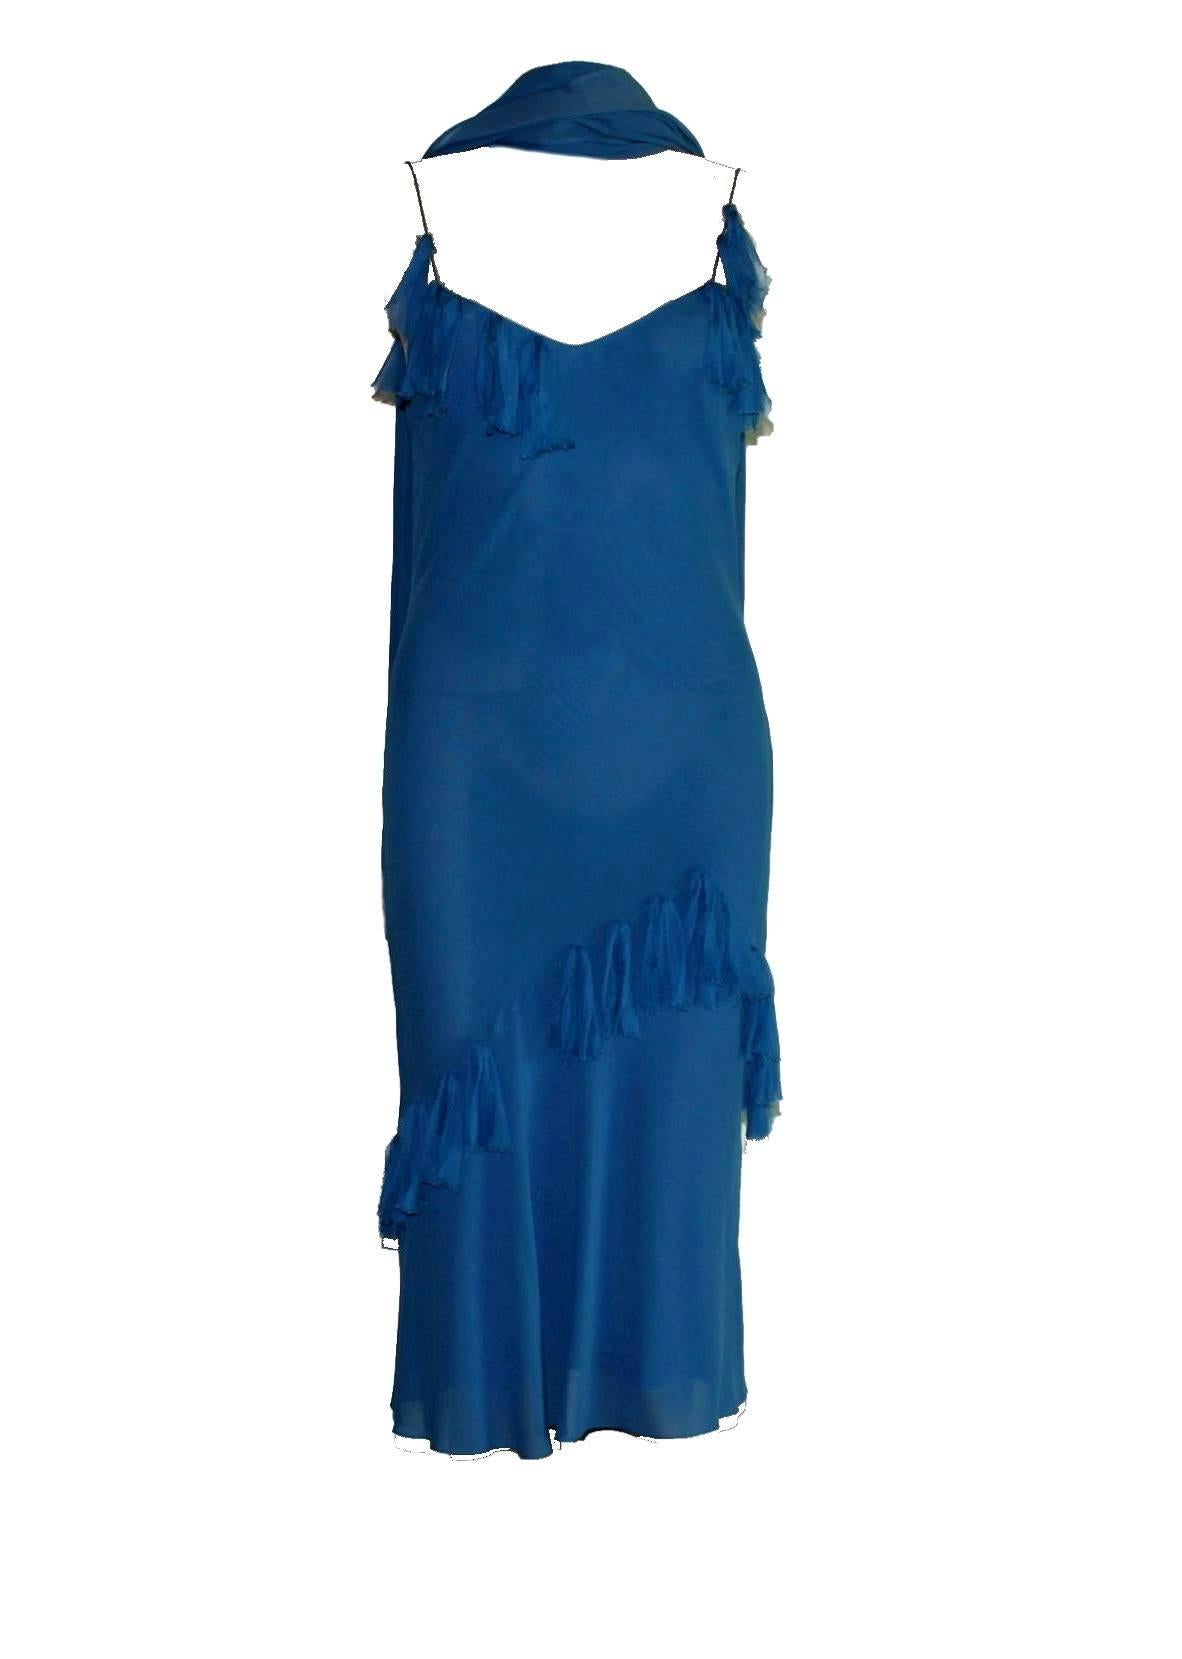 Stunning John Galliano Ruched Blue Silk Dress with Matching Scarf / Stola / Shaw 1